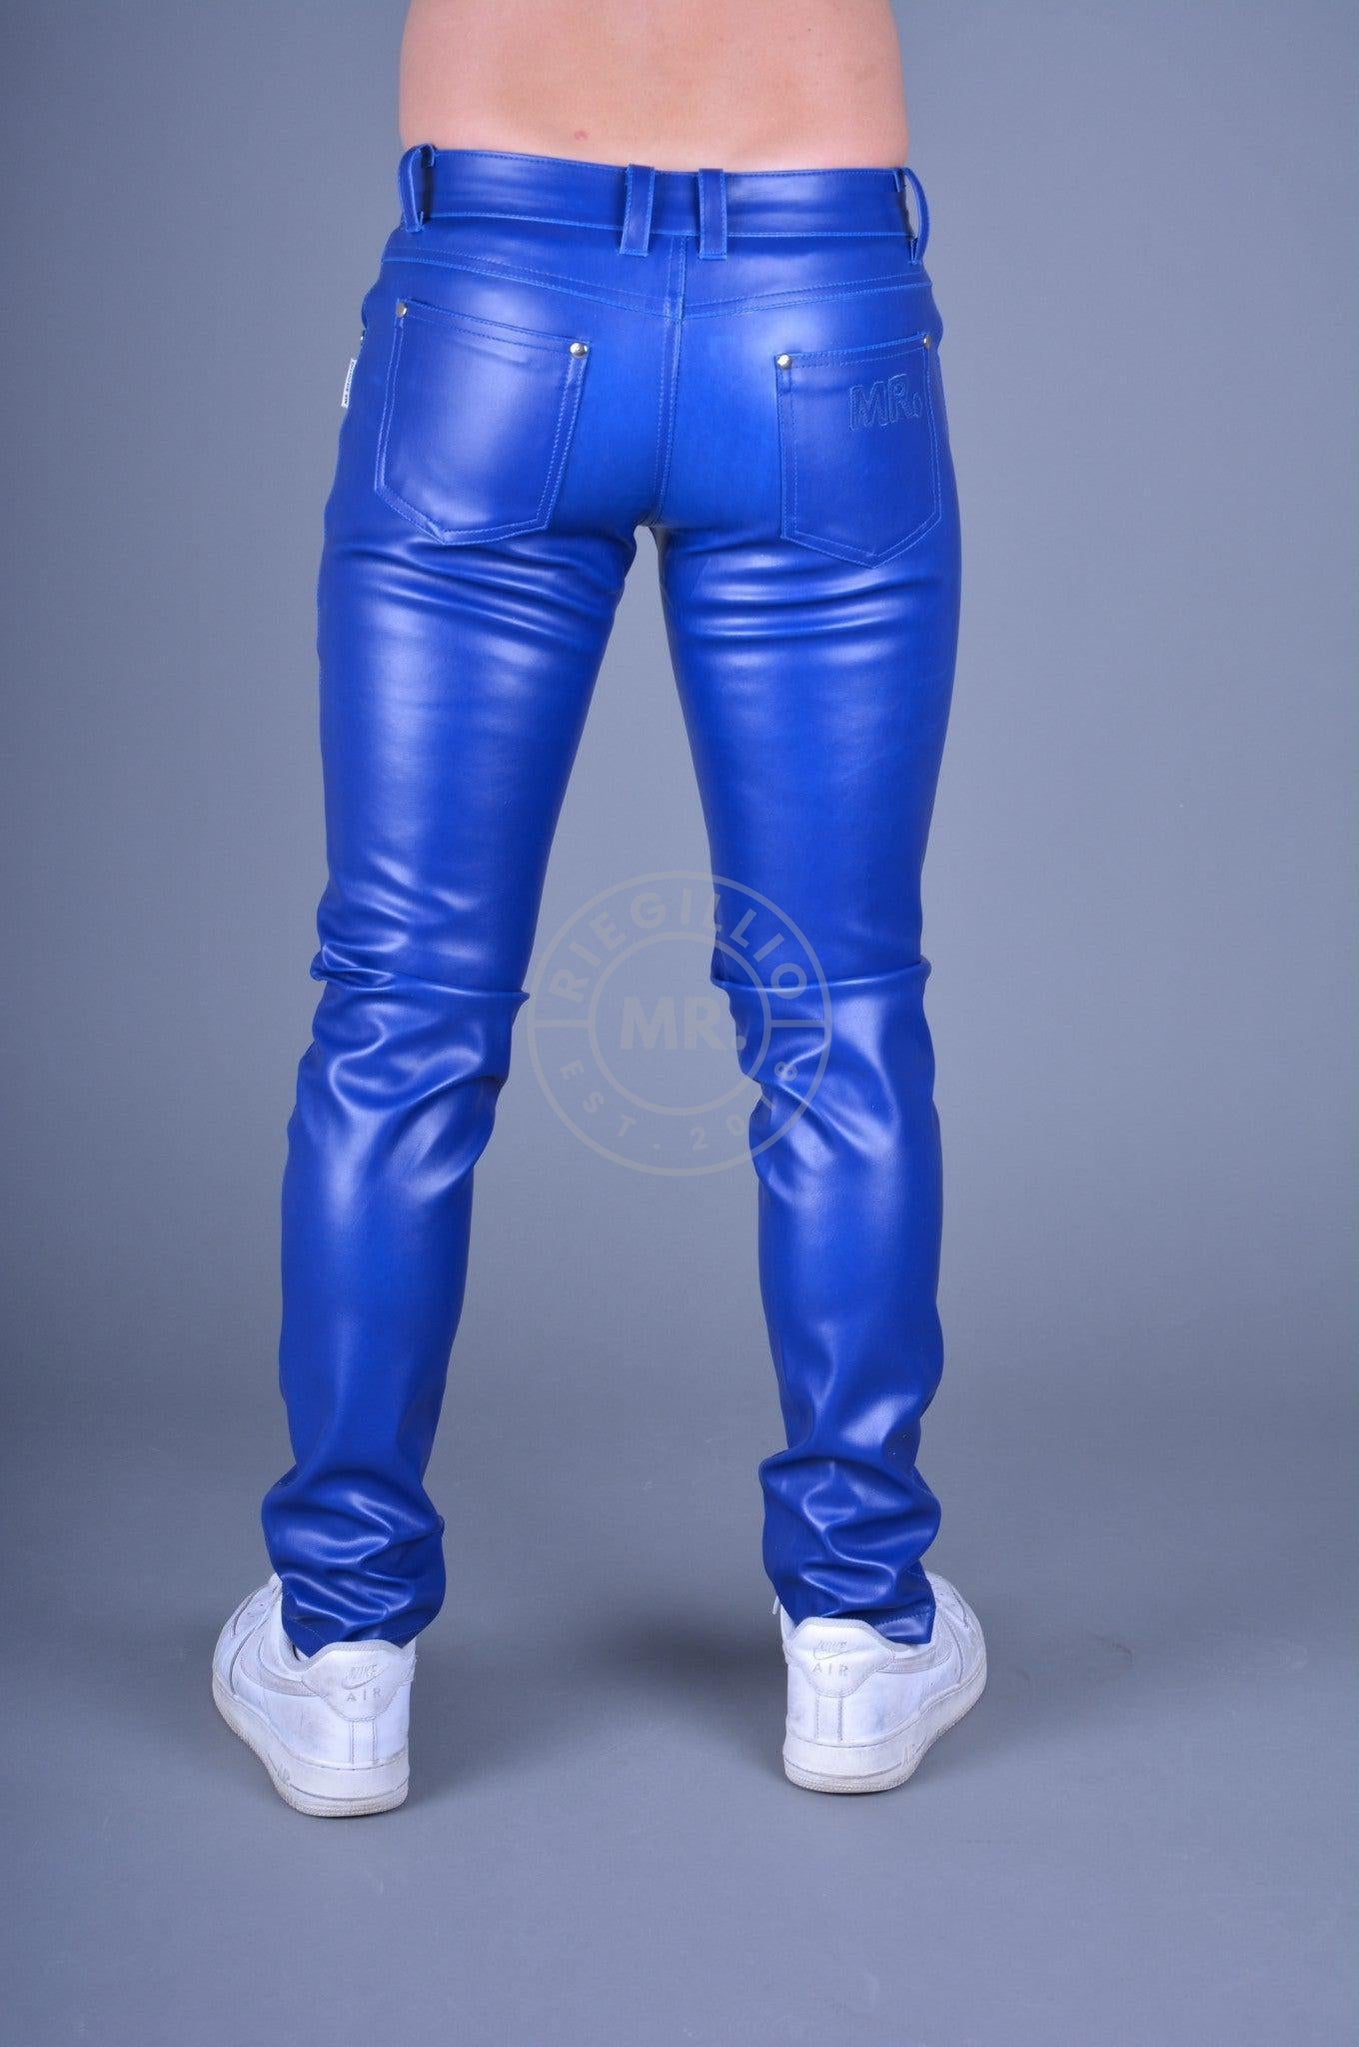 MR. 5-Pocket Pants Blue *DISCONTINUED ITEM*-at MR. Riegillio